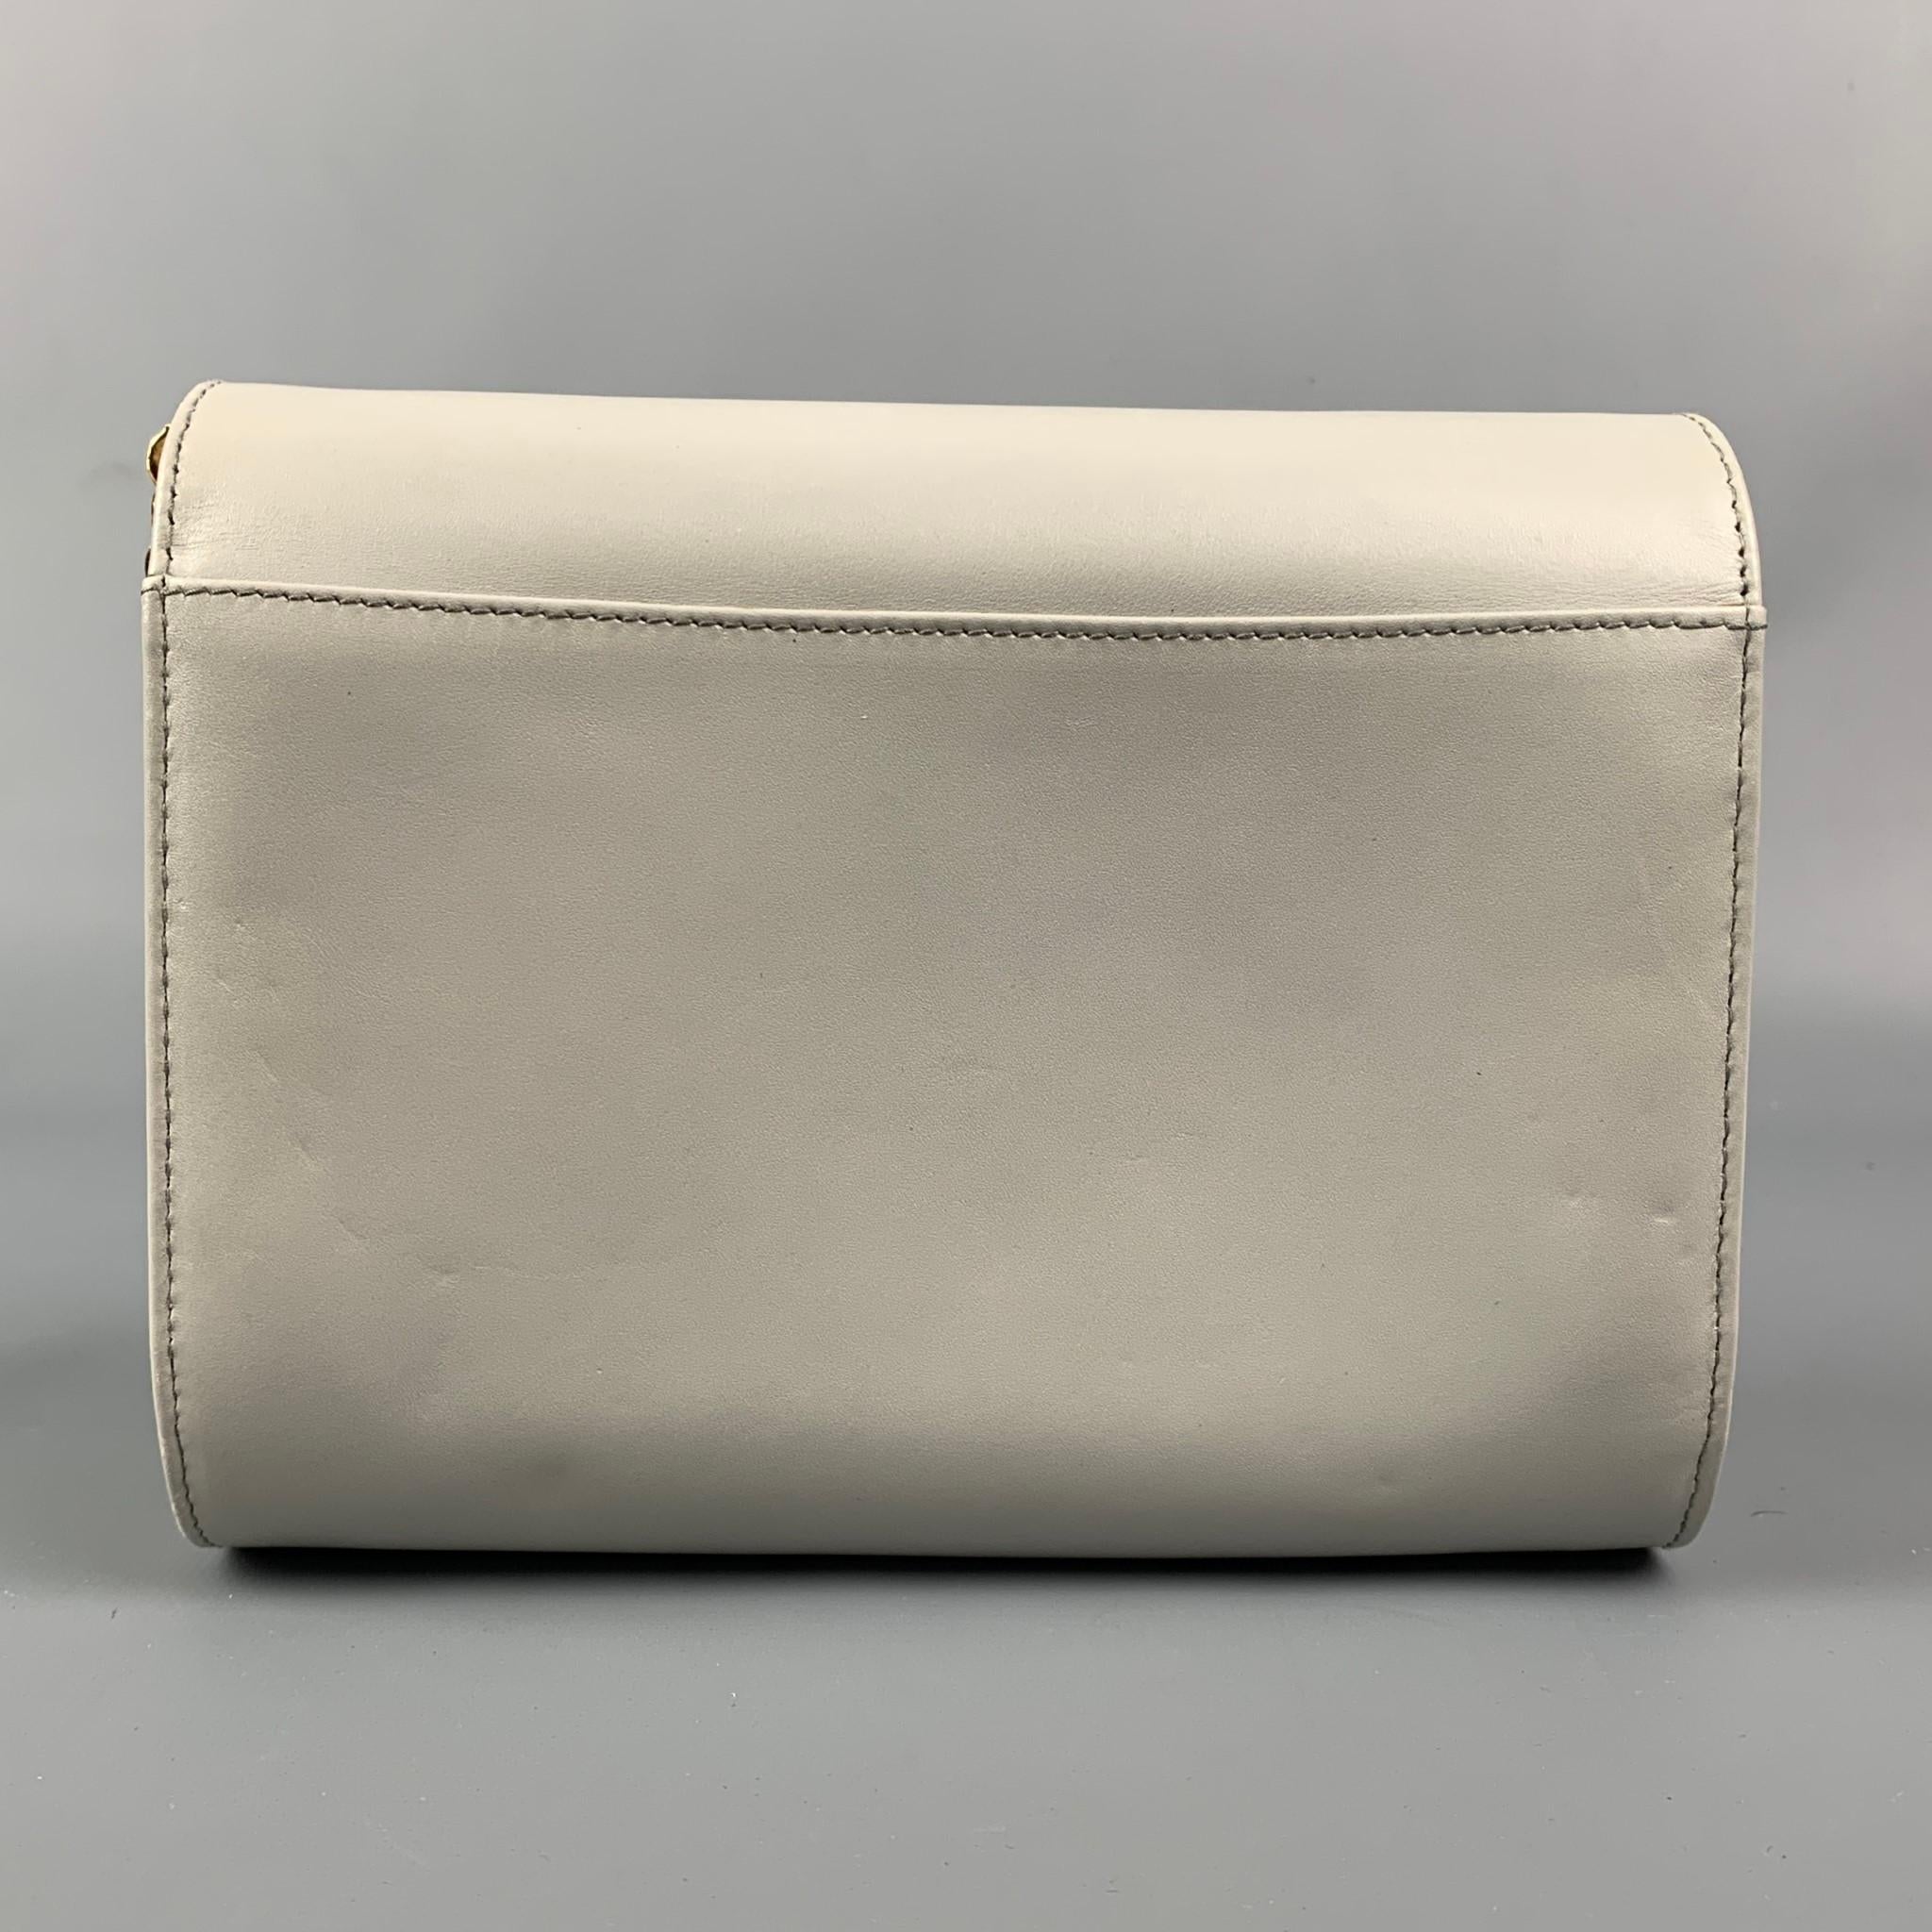 discount 96% WOMEN FASHION Bags Leatherette Black Single TORRENTE Handbag 